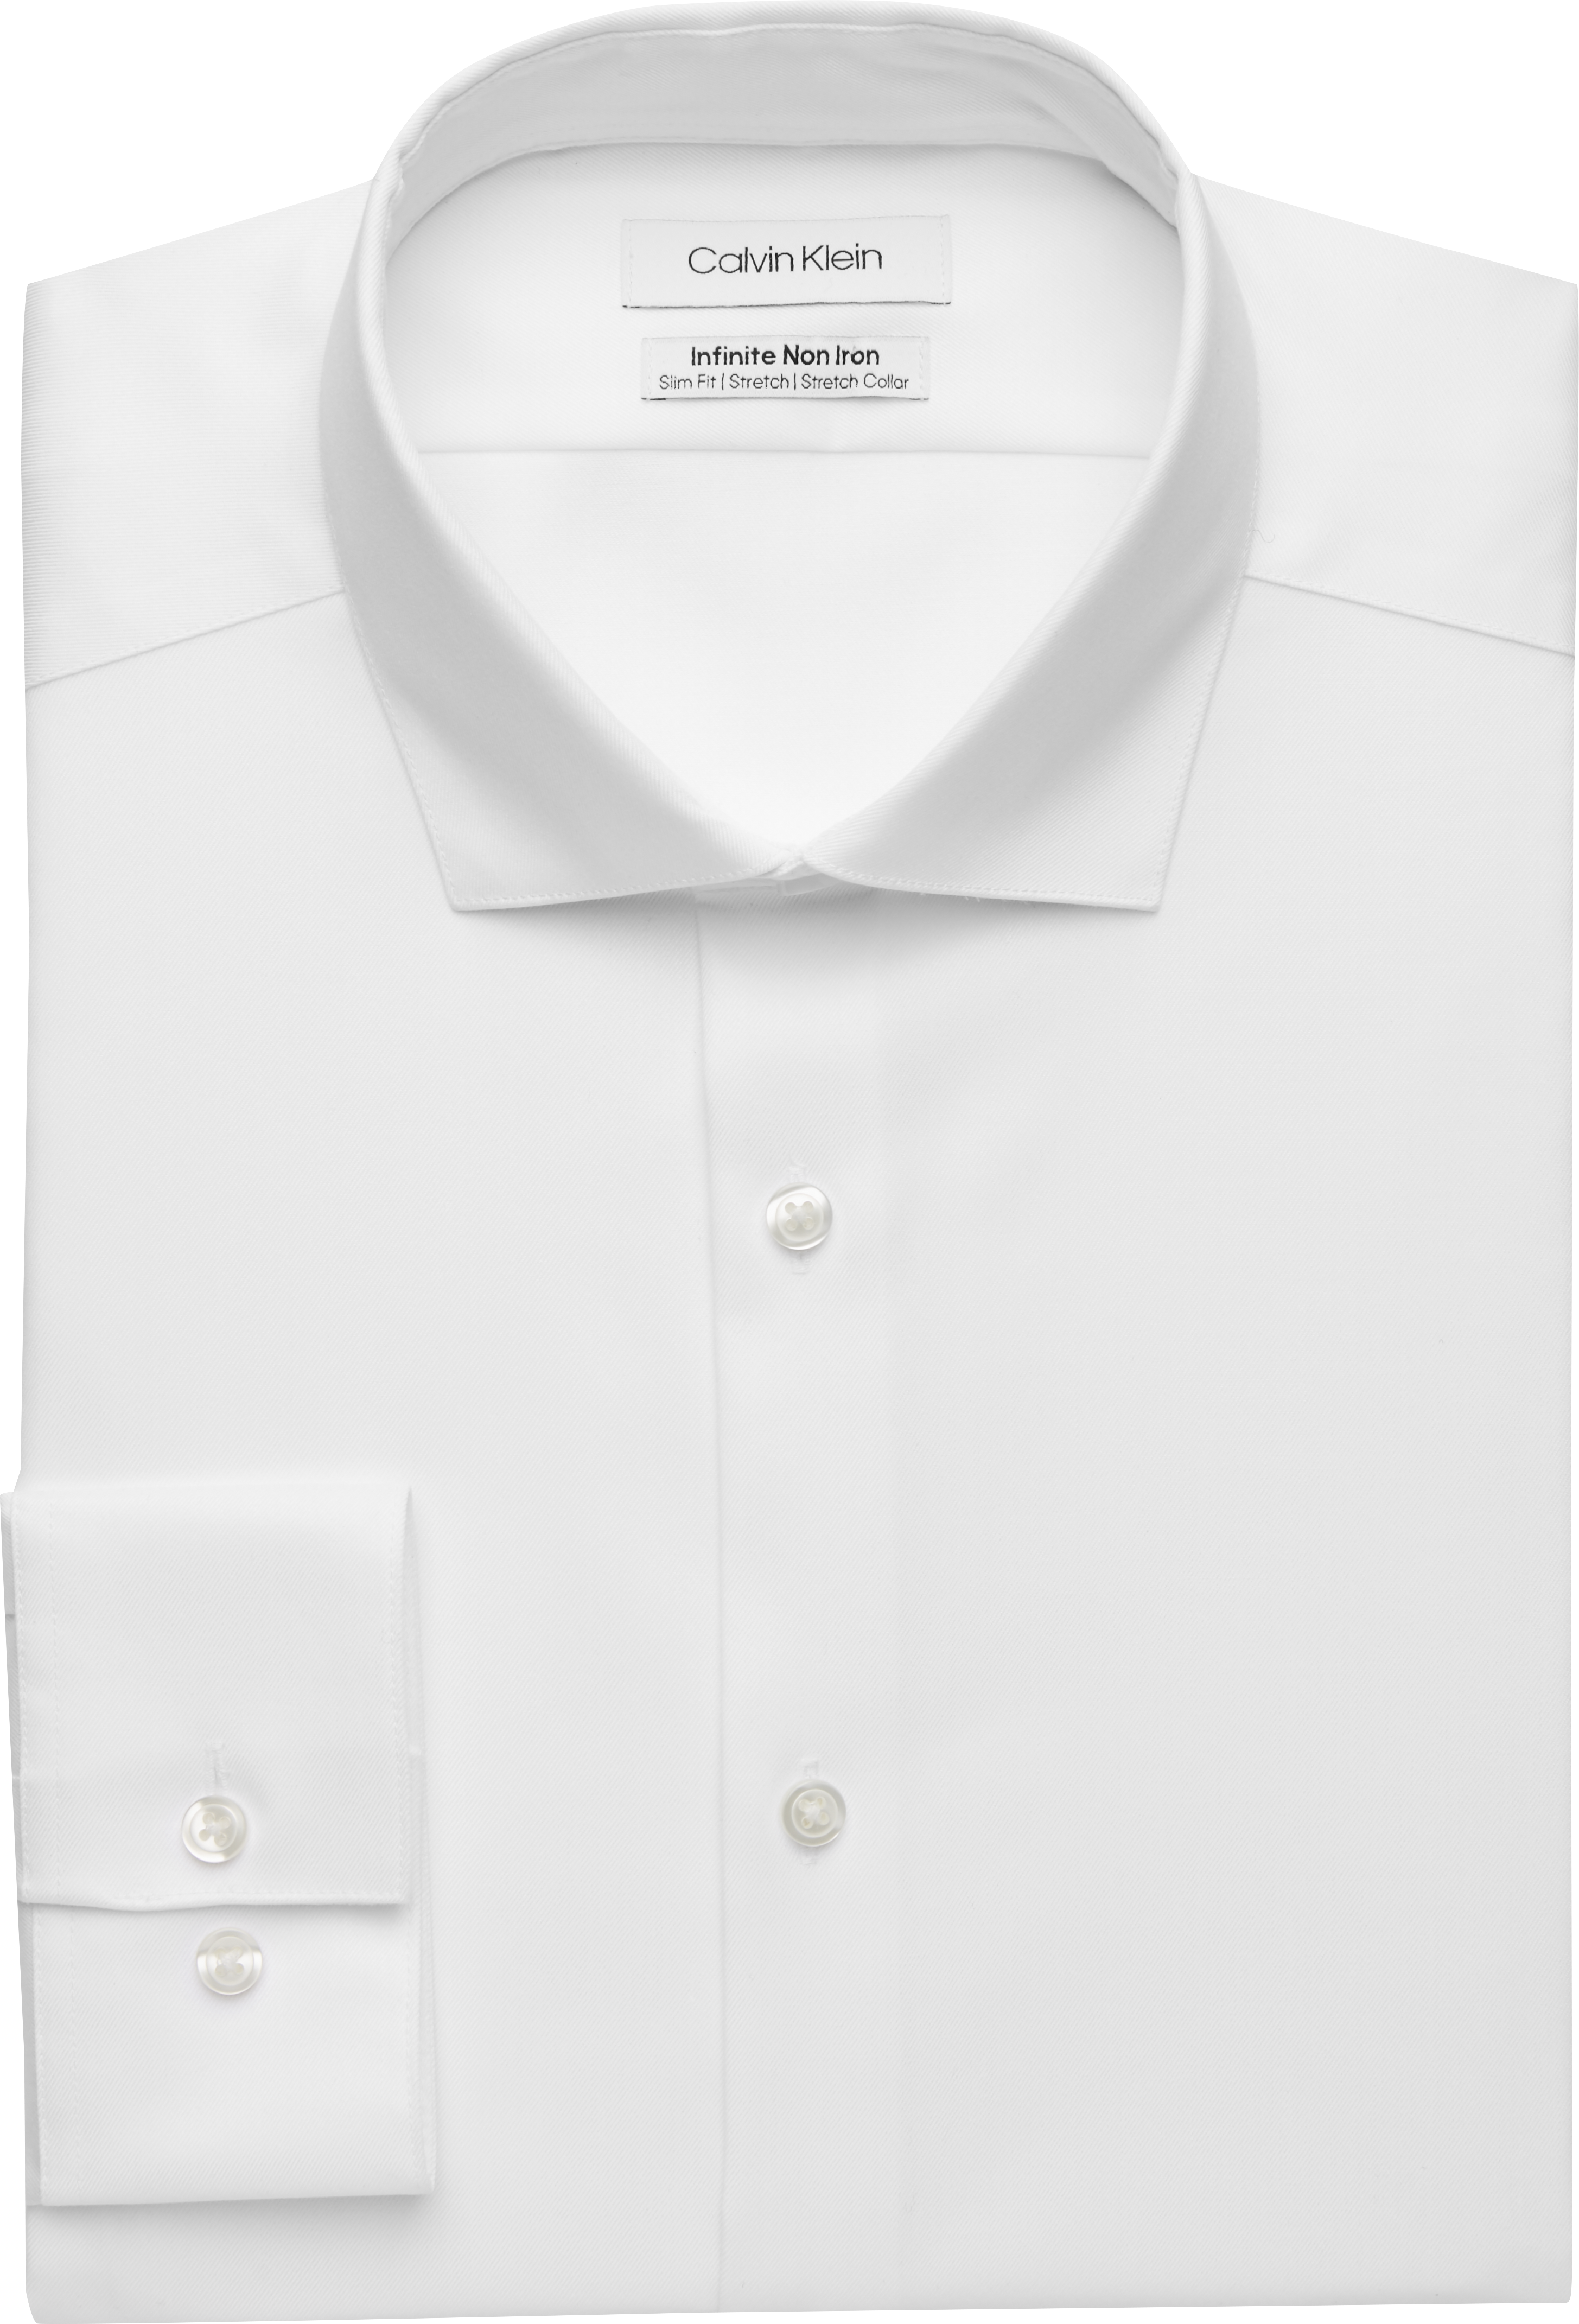 Calvin Klein Infinite Non-Iron Slim Fit Stretch Collar Dress Shirt, White -  Men's Suits | Men's